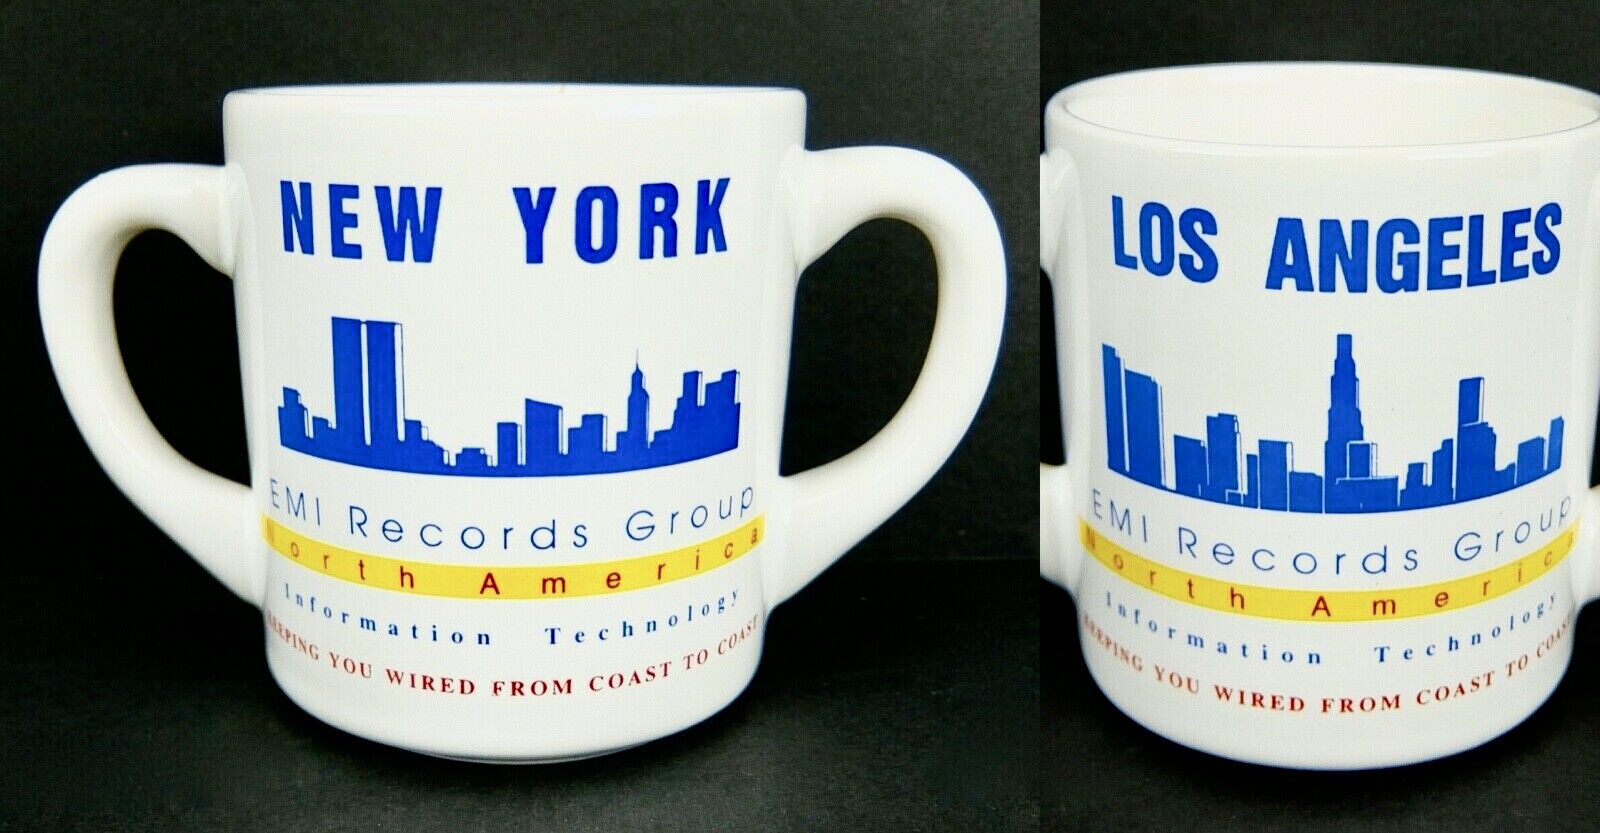 Rare Vintage EMI Records Group Mug Information Technology North America LA NY